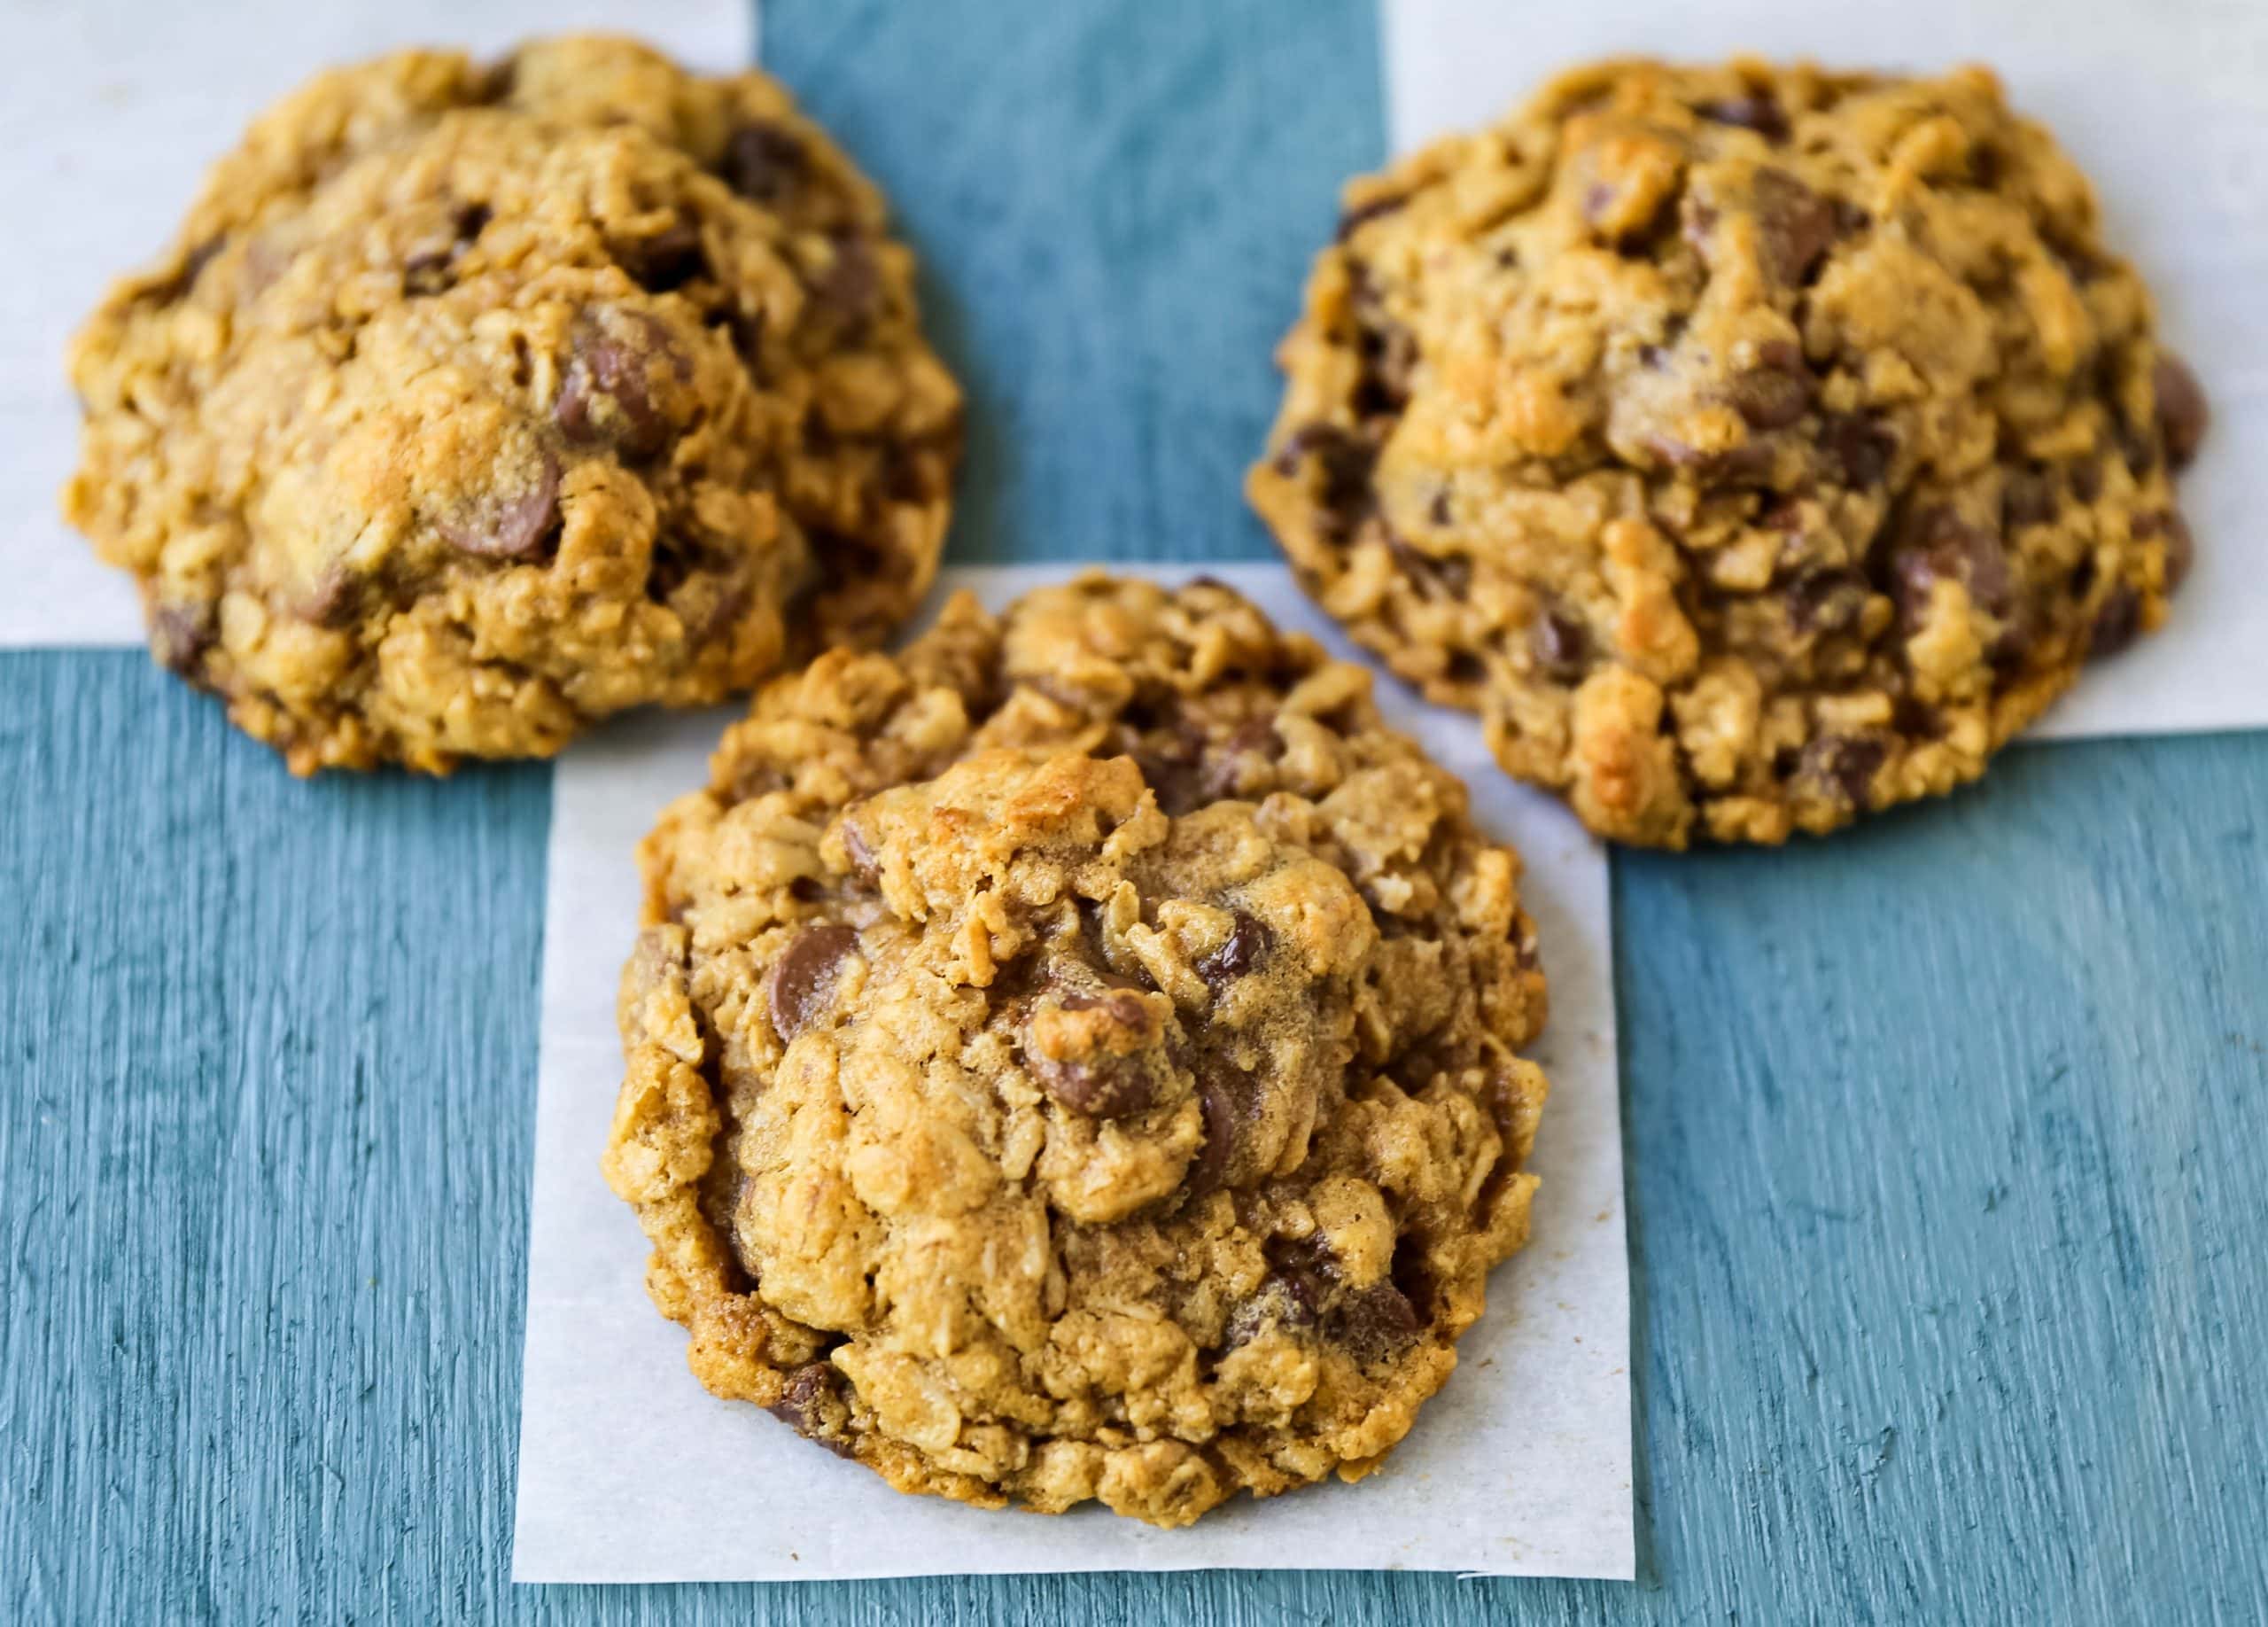 https://www.modernhoney.com/wp-content/uploads/2020/04/Gluten-Free-Chocolate-Chip-Peanut-Butter-Oatmeal-Cookies-6-scaled.jpg